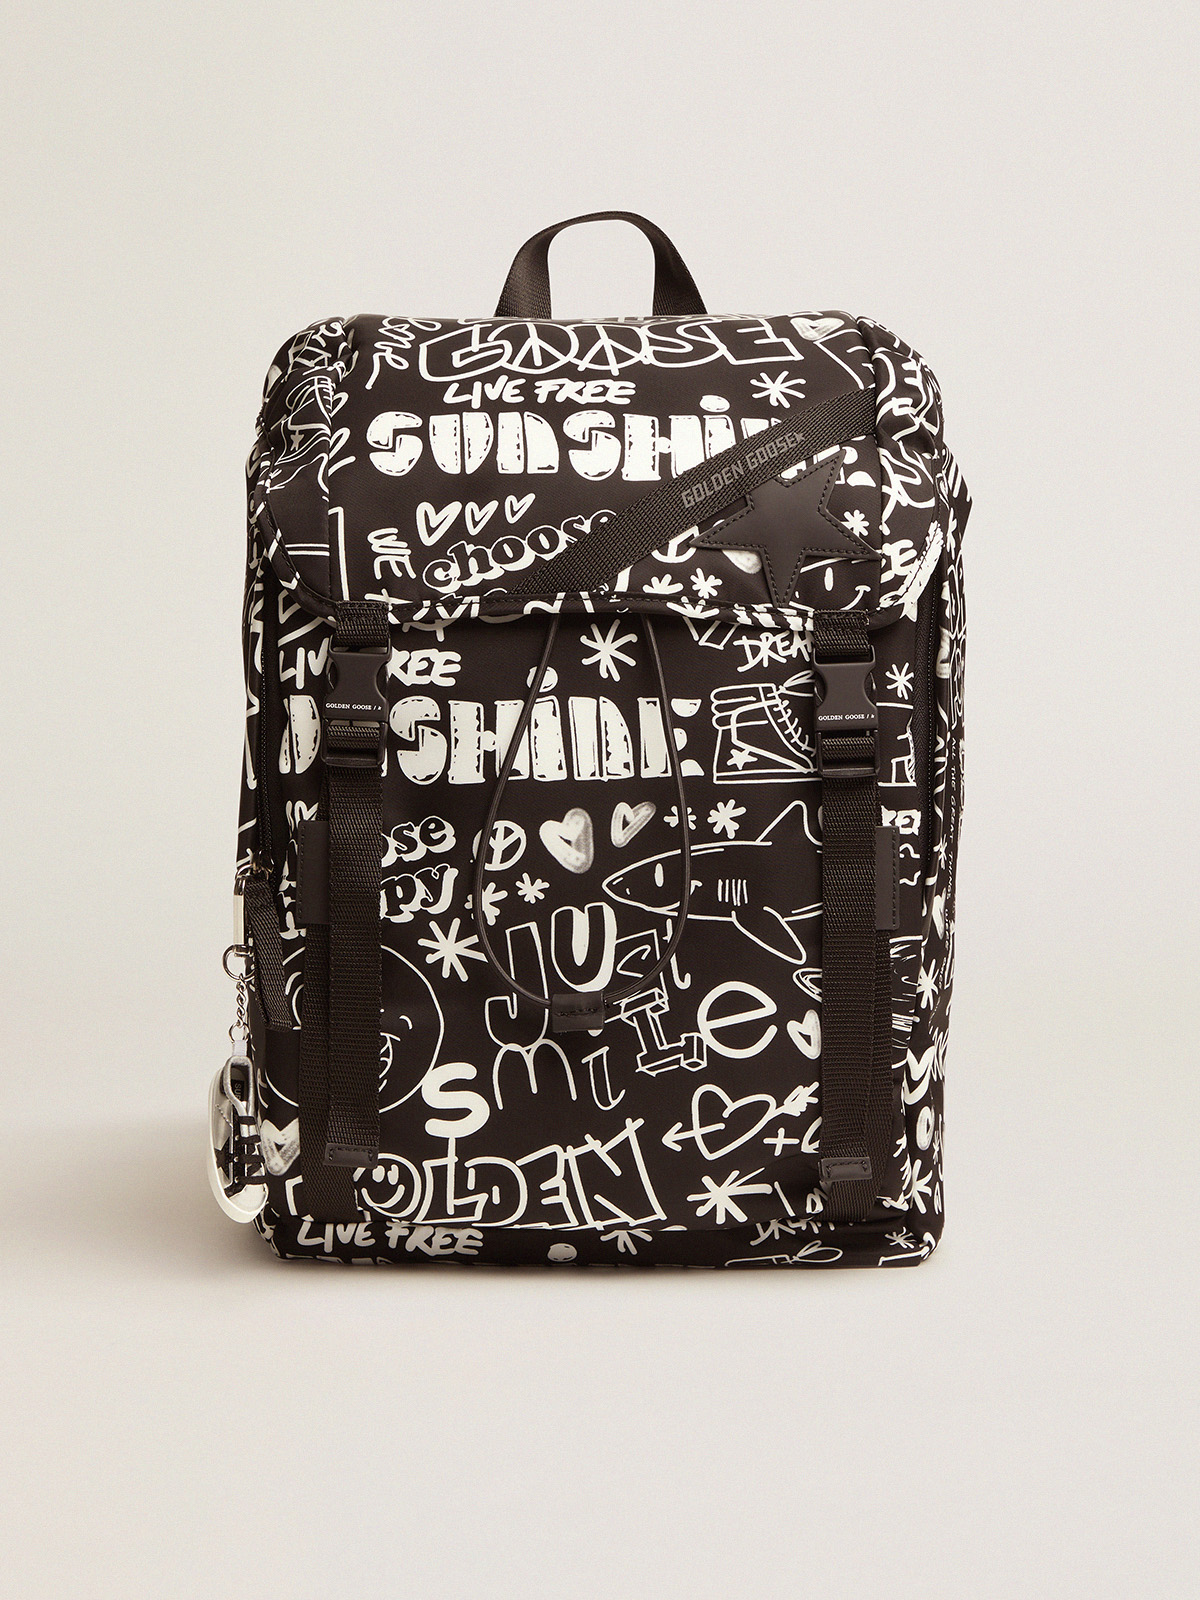 Black Nylon Logo Backpack - GBNY